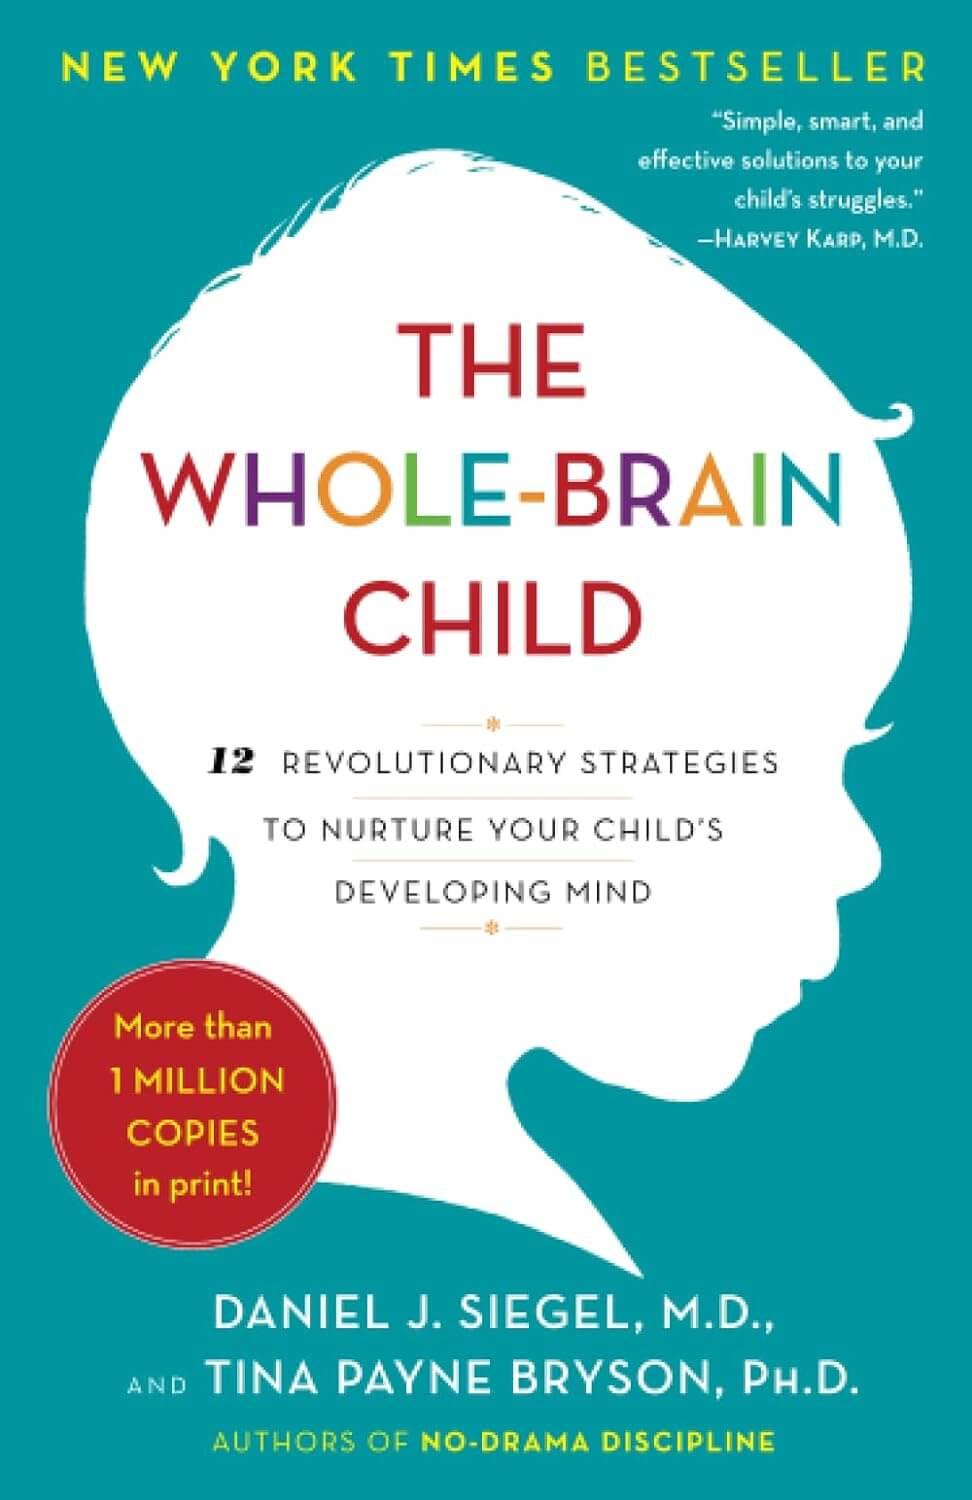 "The Whole-Brain Child" by Daniel J. Siegel, M.D., and Tina Payne Bryson, PH.D